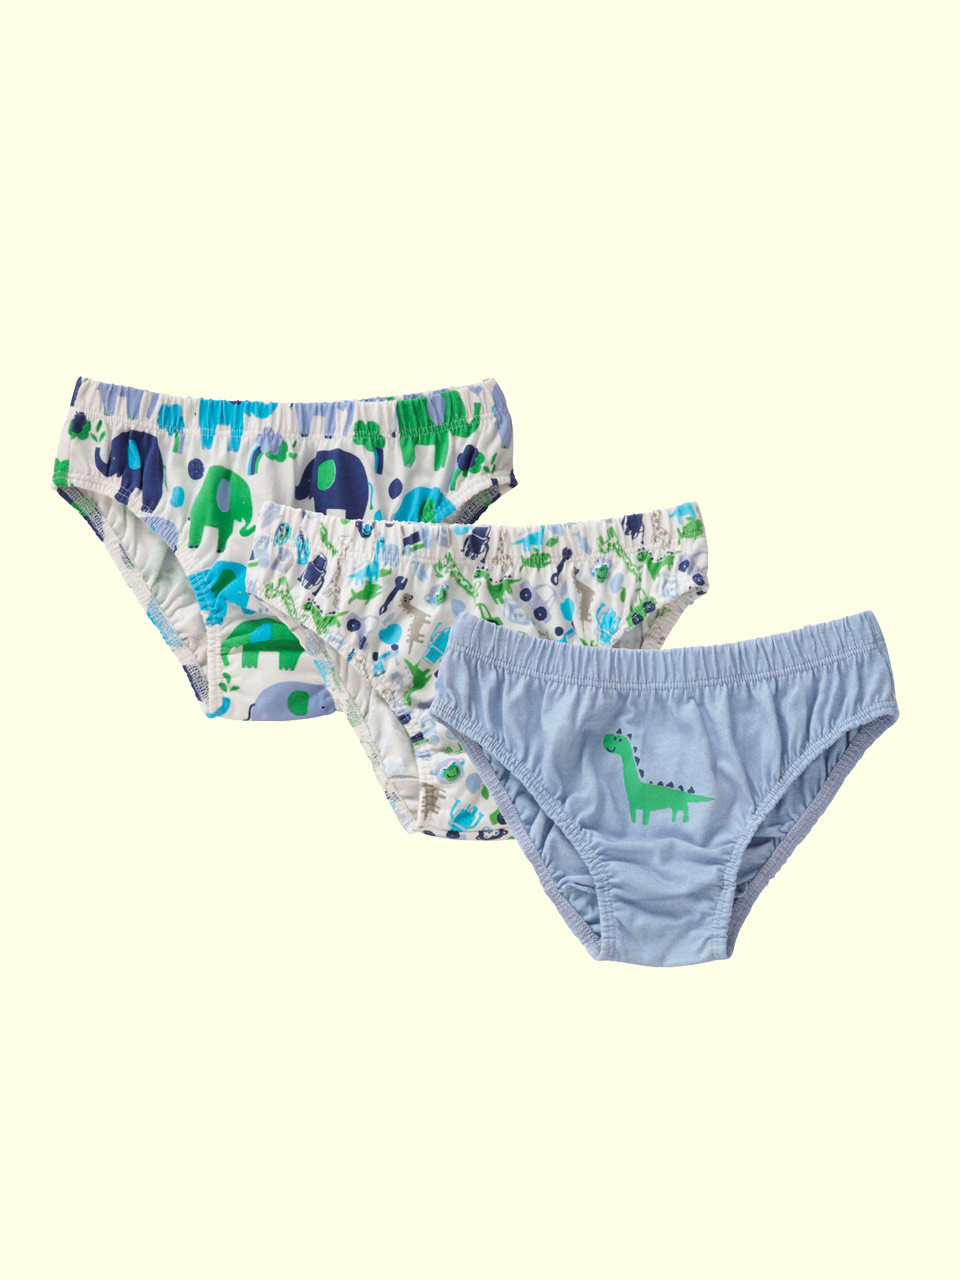  Little GirlsSoft Cotton Underwear Fox Elephant